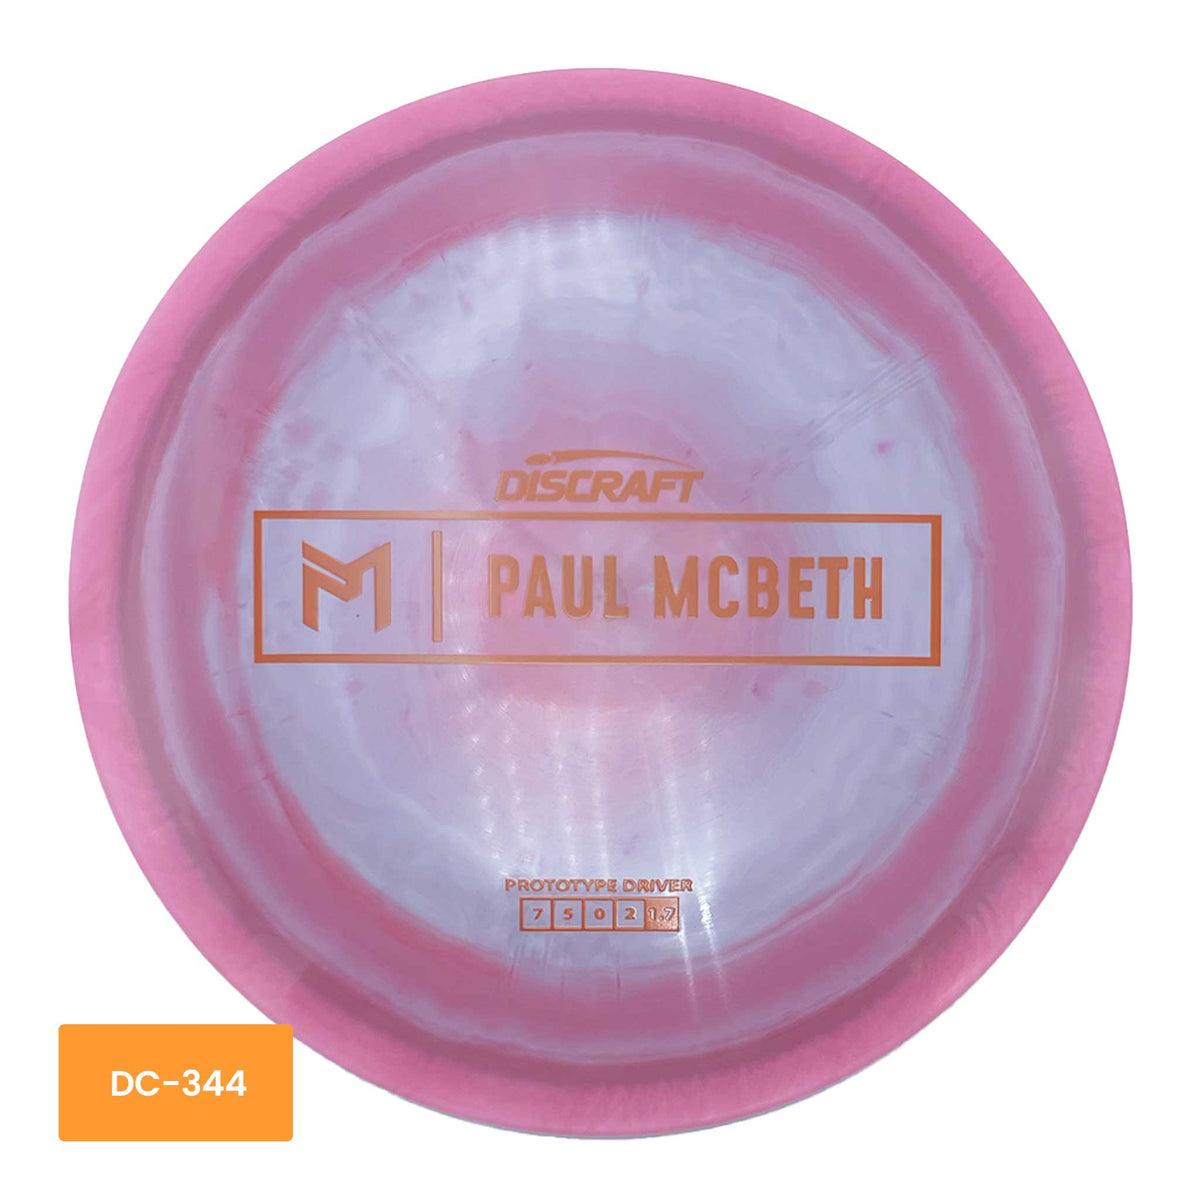 Discraft Paul McBeth Athena Prototype driver - Light Blue / Purple